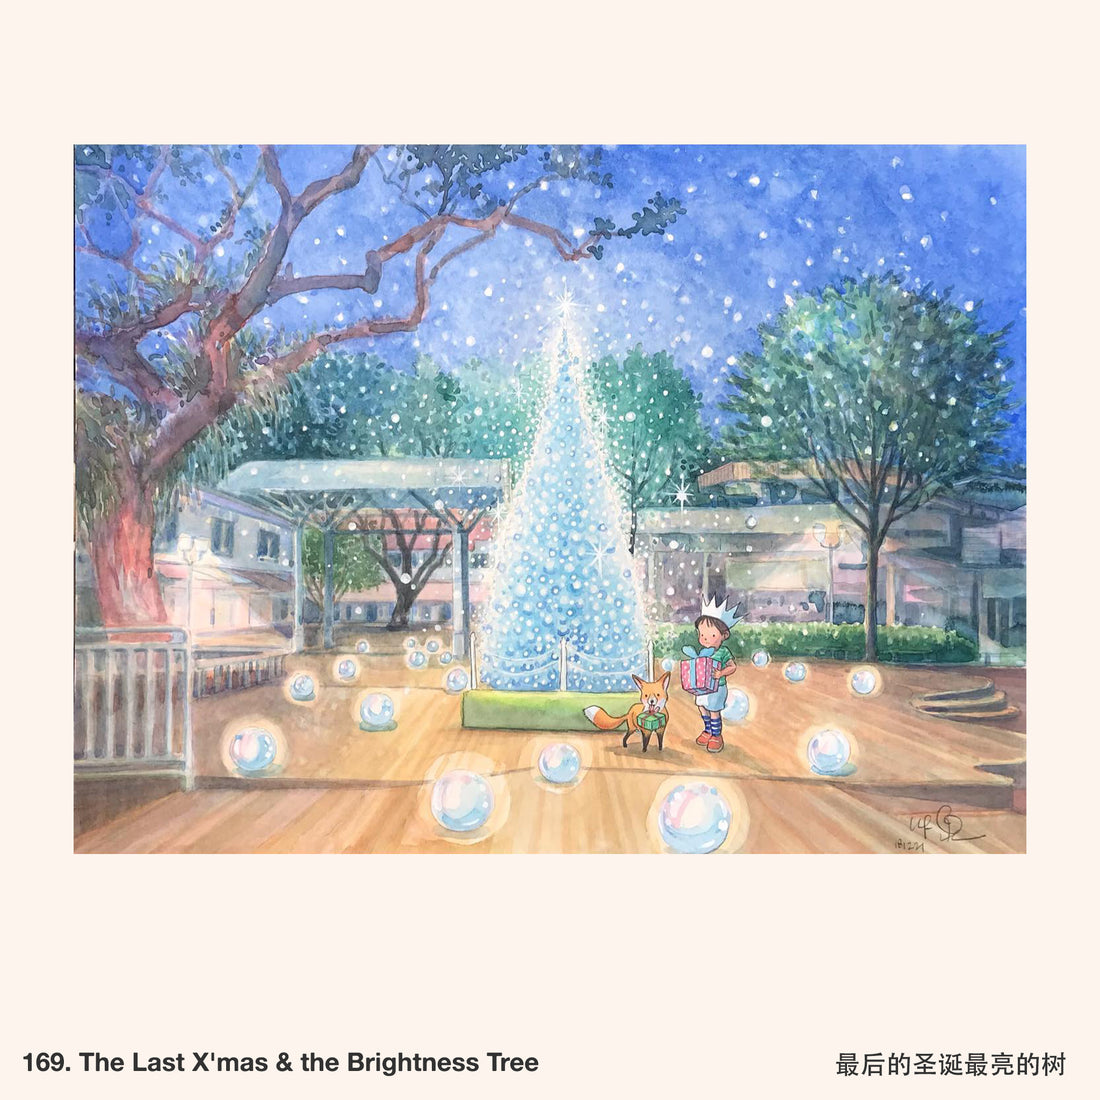 169. The Last X'mas & the Brightness Tree Artwork